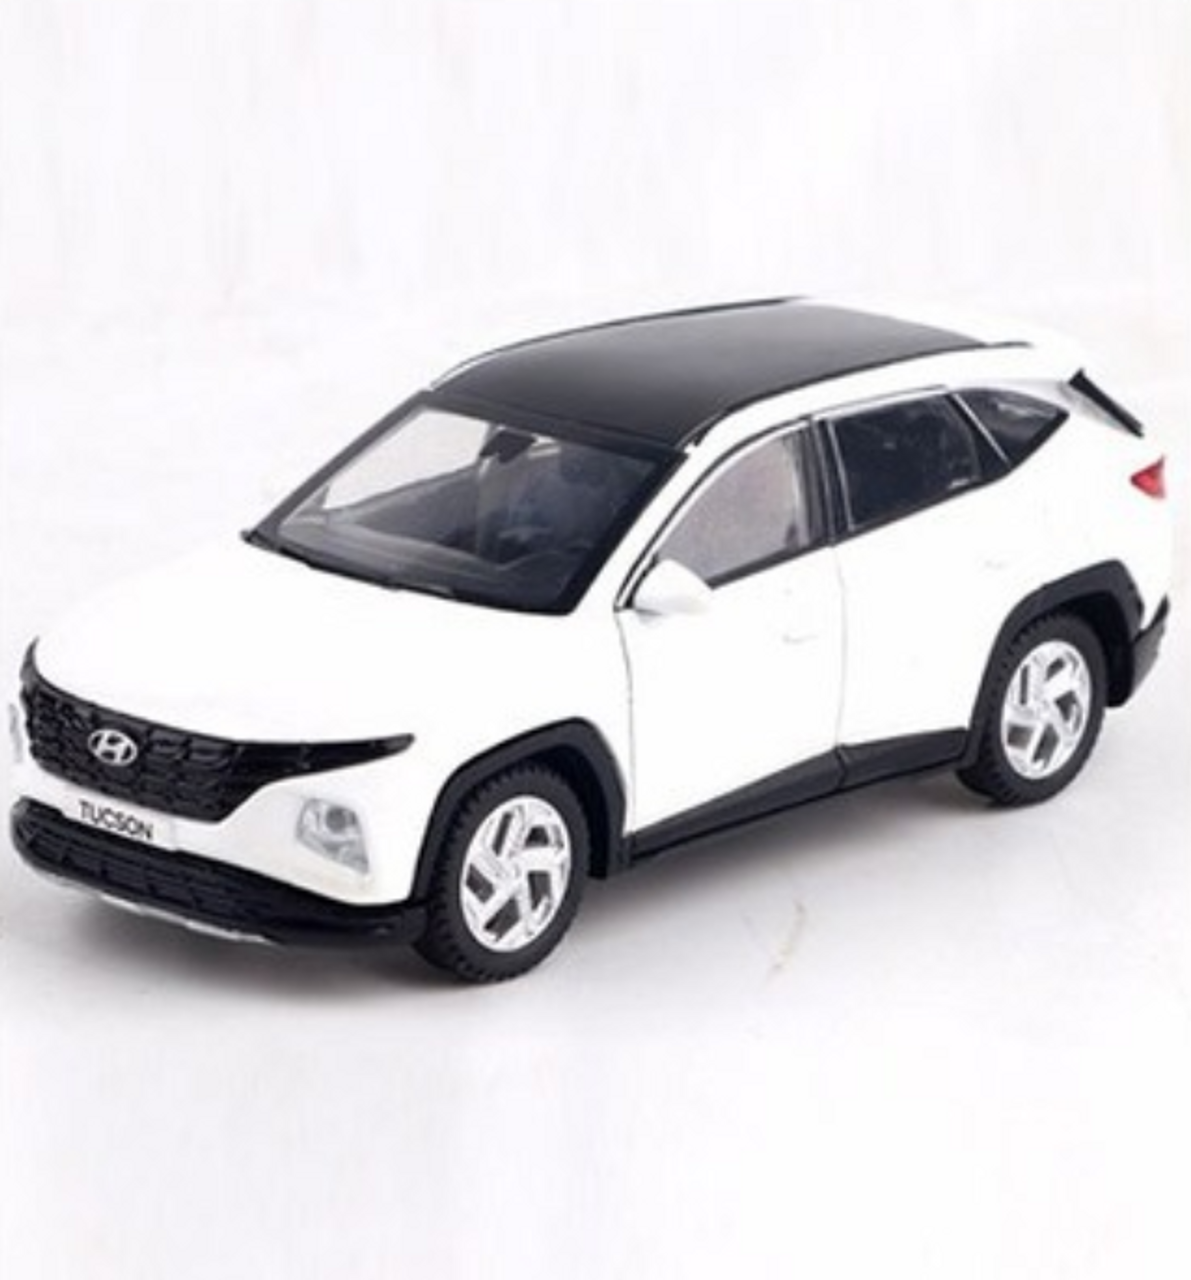 Hyundai Motors Tucson NX4 Diecast Mini Car 2 pcs Set Toy 1:38